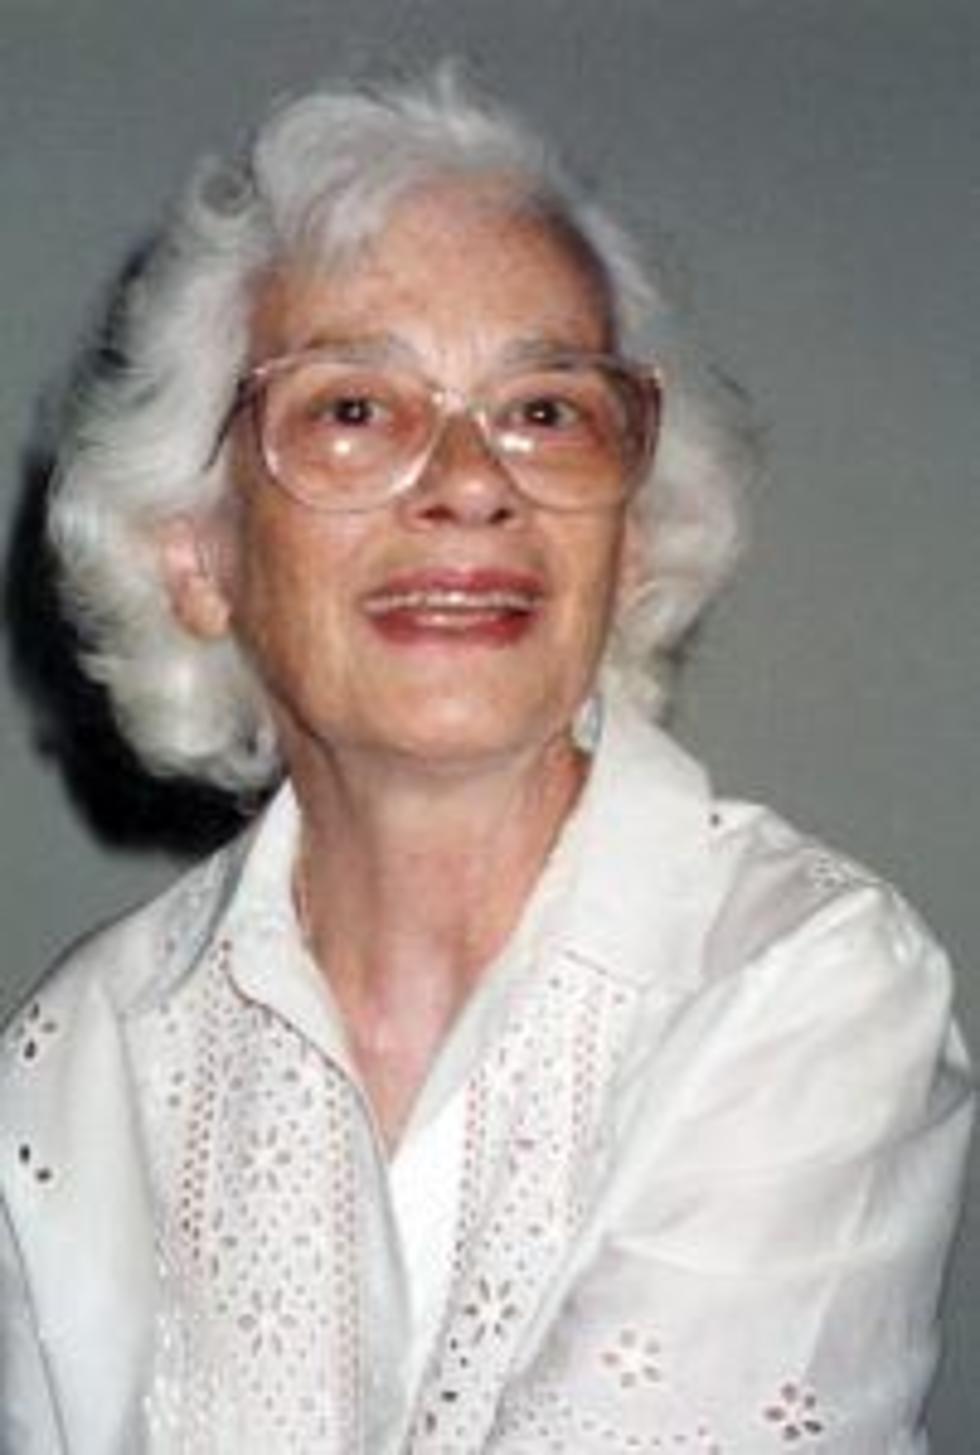 Obituary: Janet Ellen MacFarlane